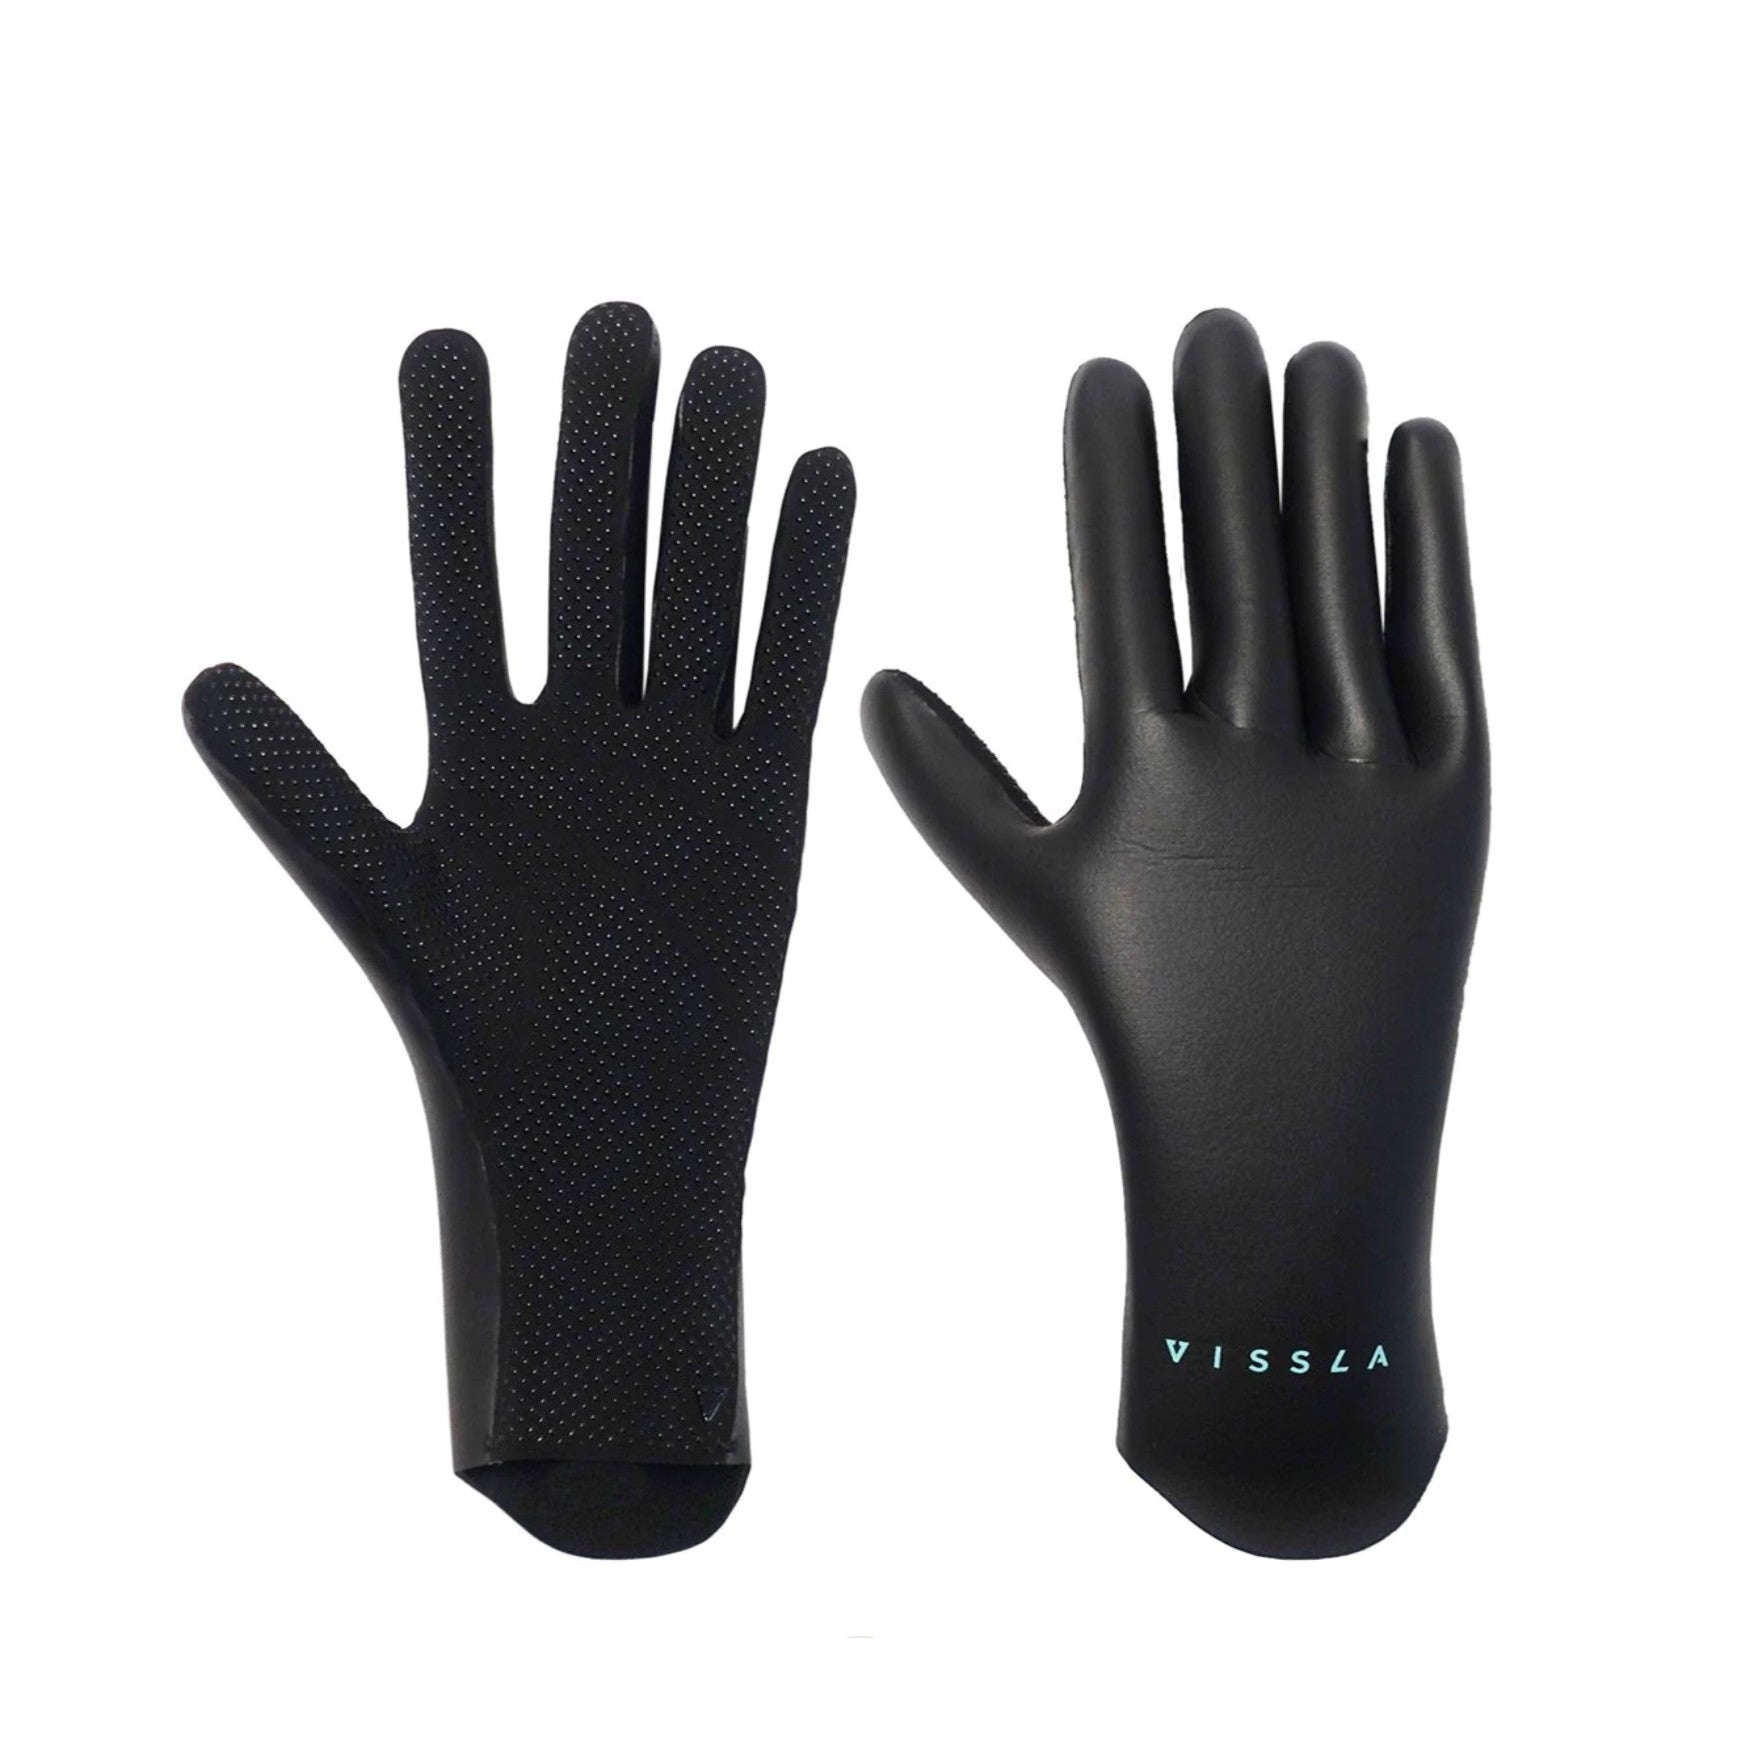 VISSLA - High Seas Gloves - 1.5 MM